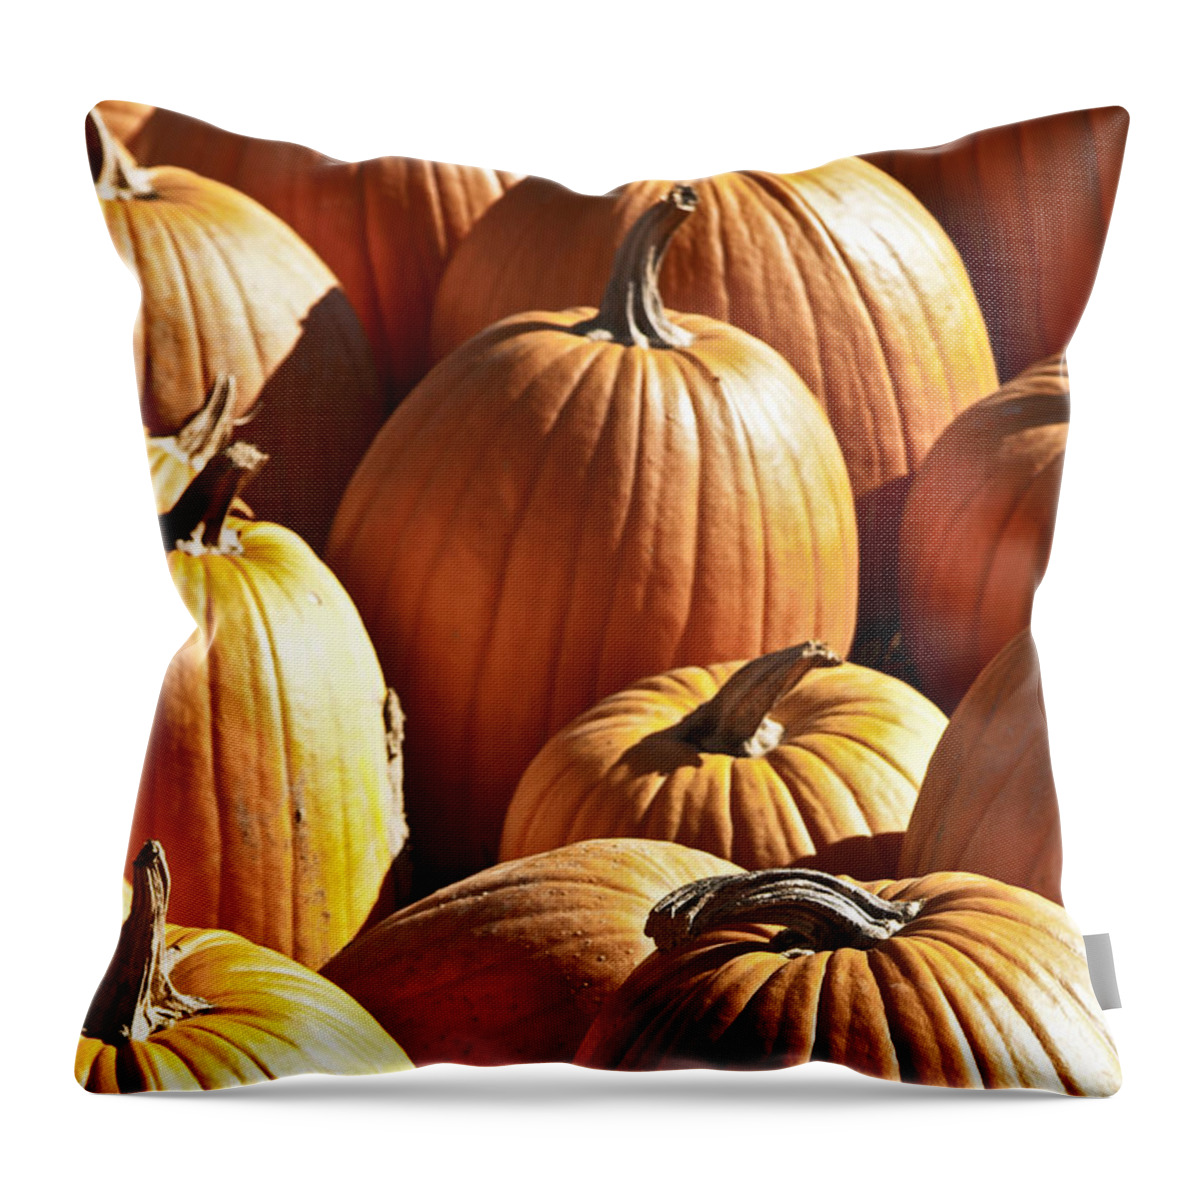 Fall Throw Pillow featuring the photograph Fall Pumpkins by Brenda Giasson